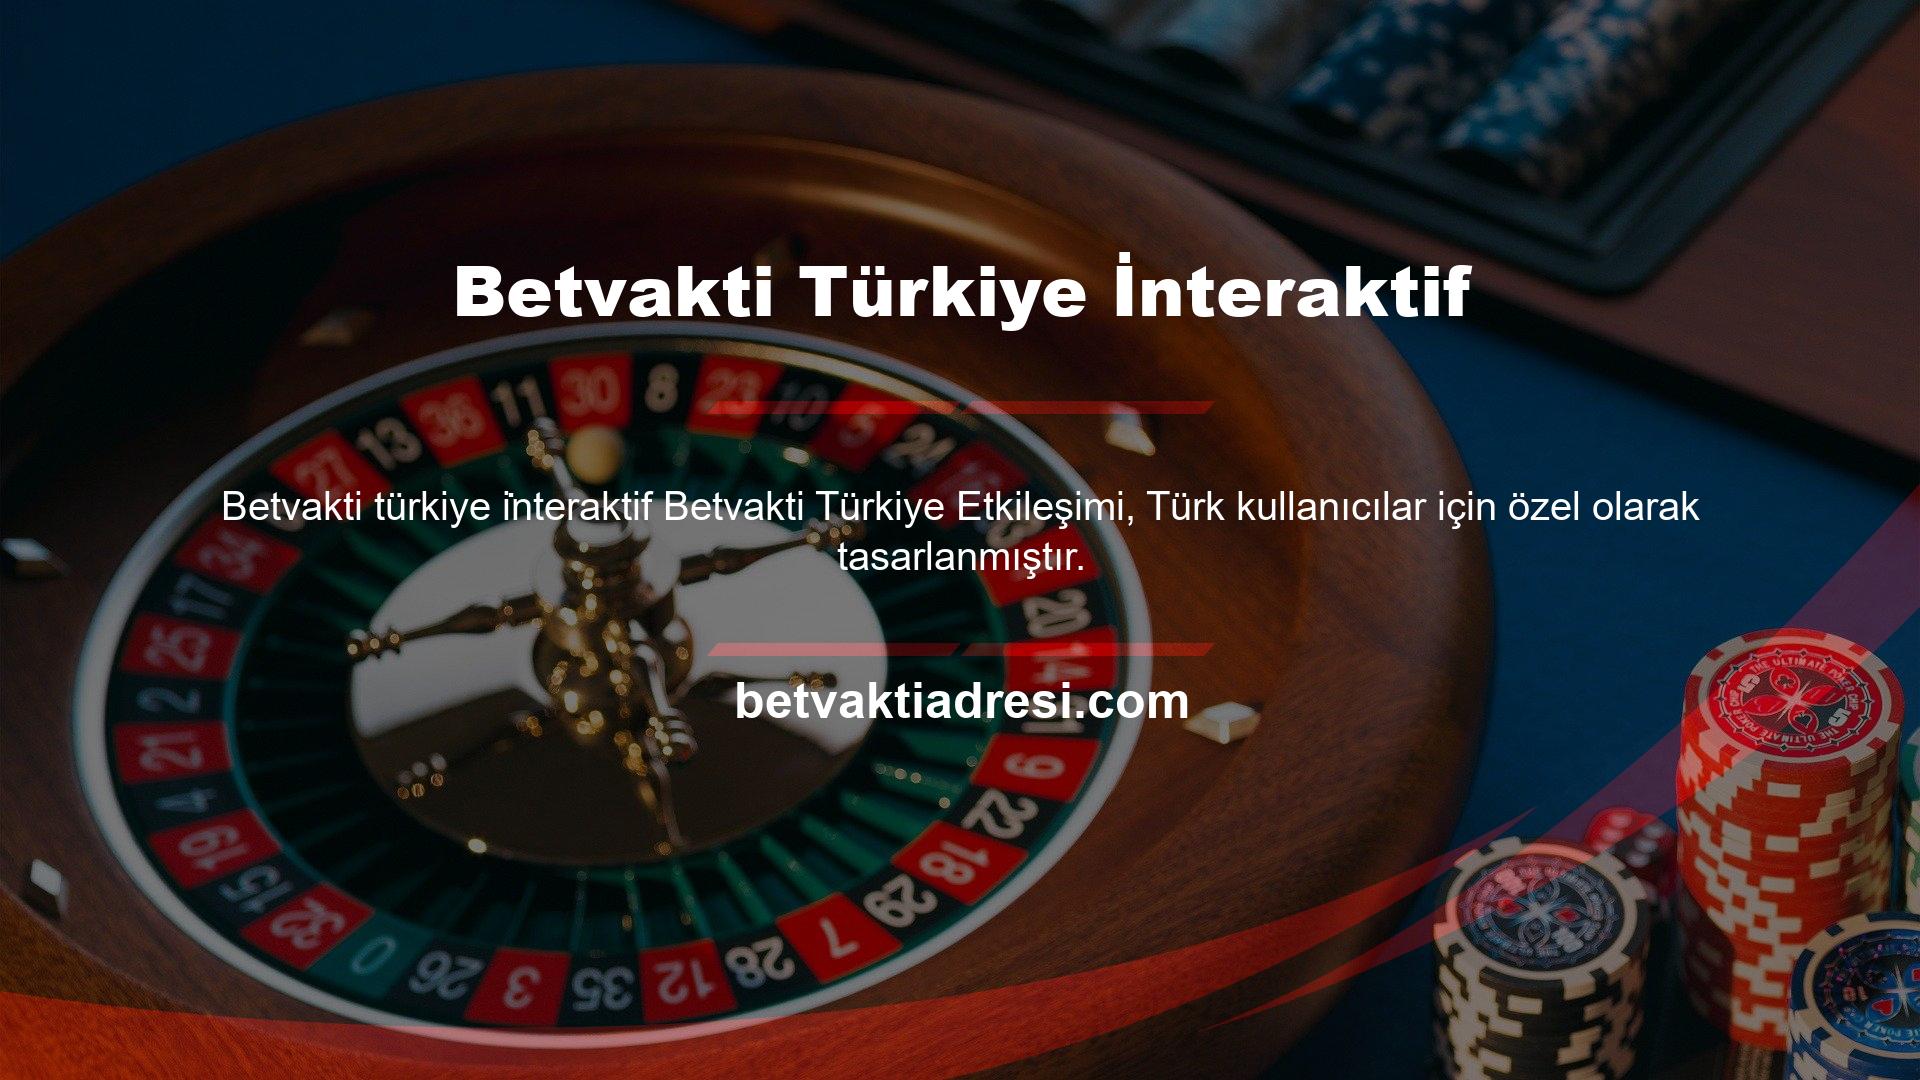 Betvakti Türkiye İnteraktif